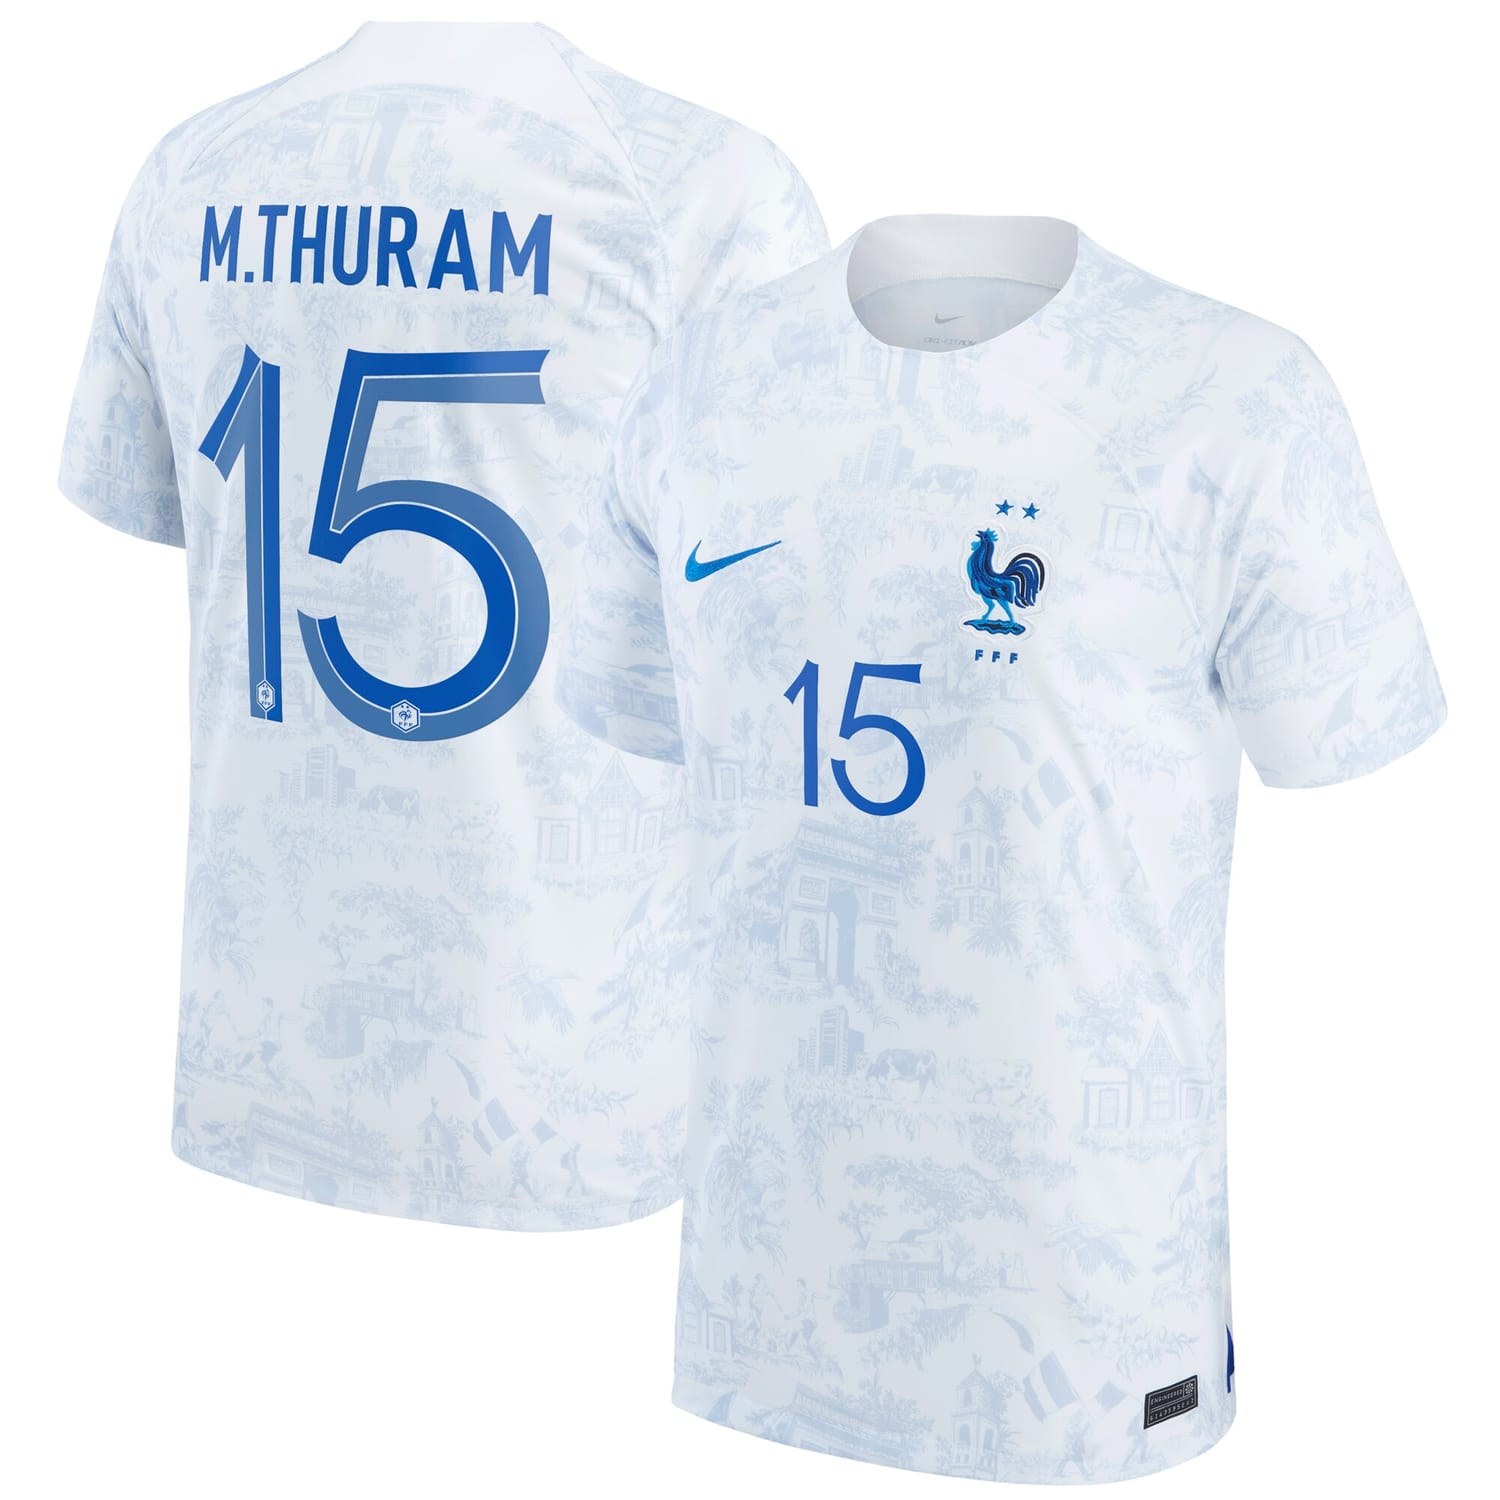 France National Team Away Jersey Shirt 2022 player Marcus Thuram 15 printing for Men